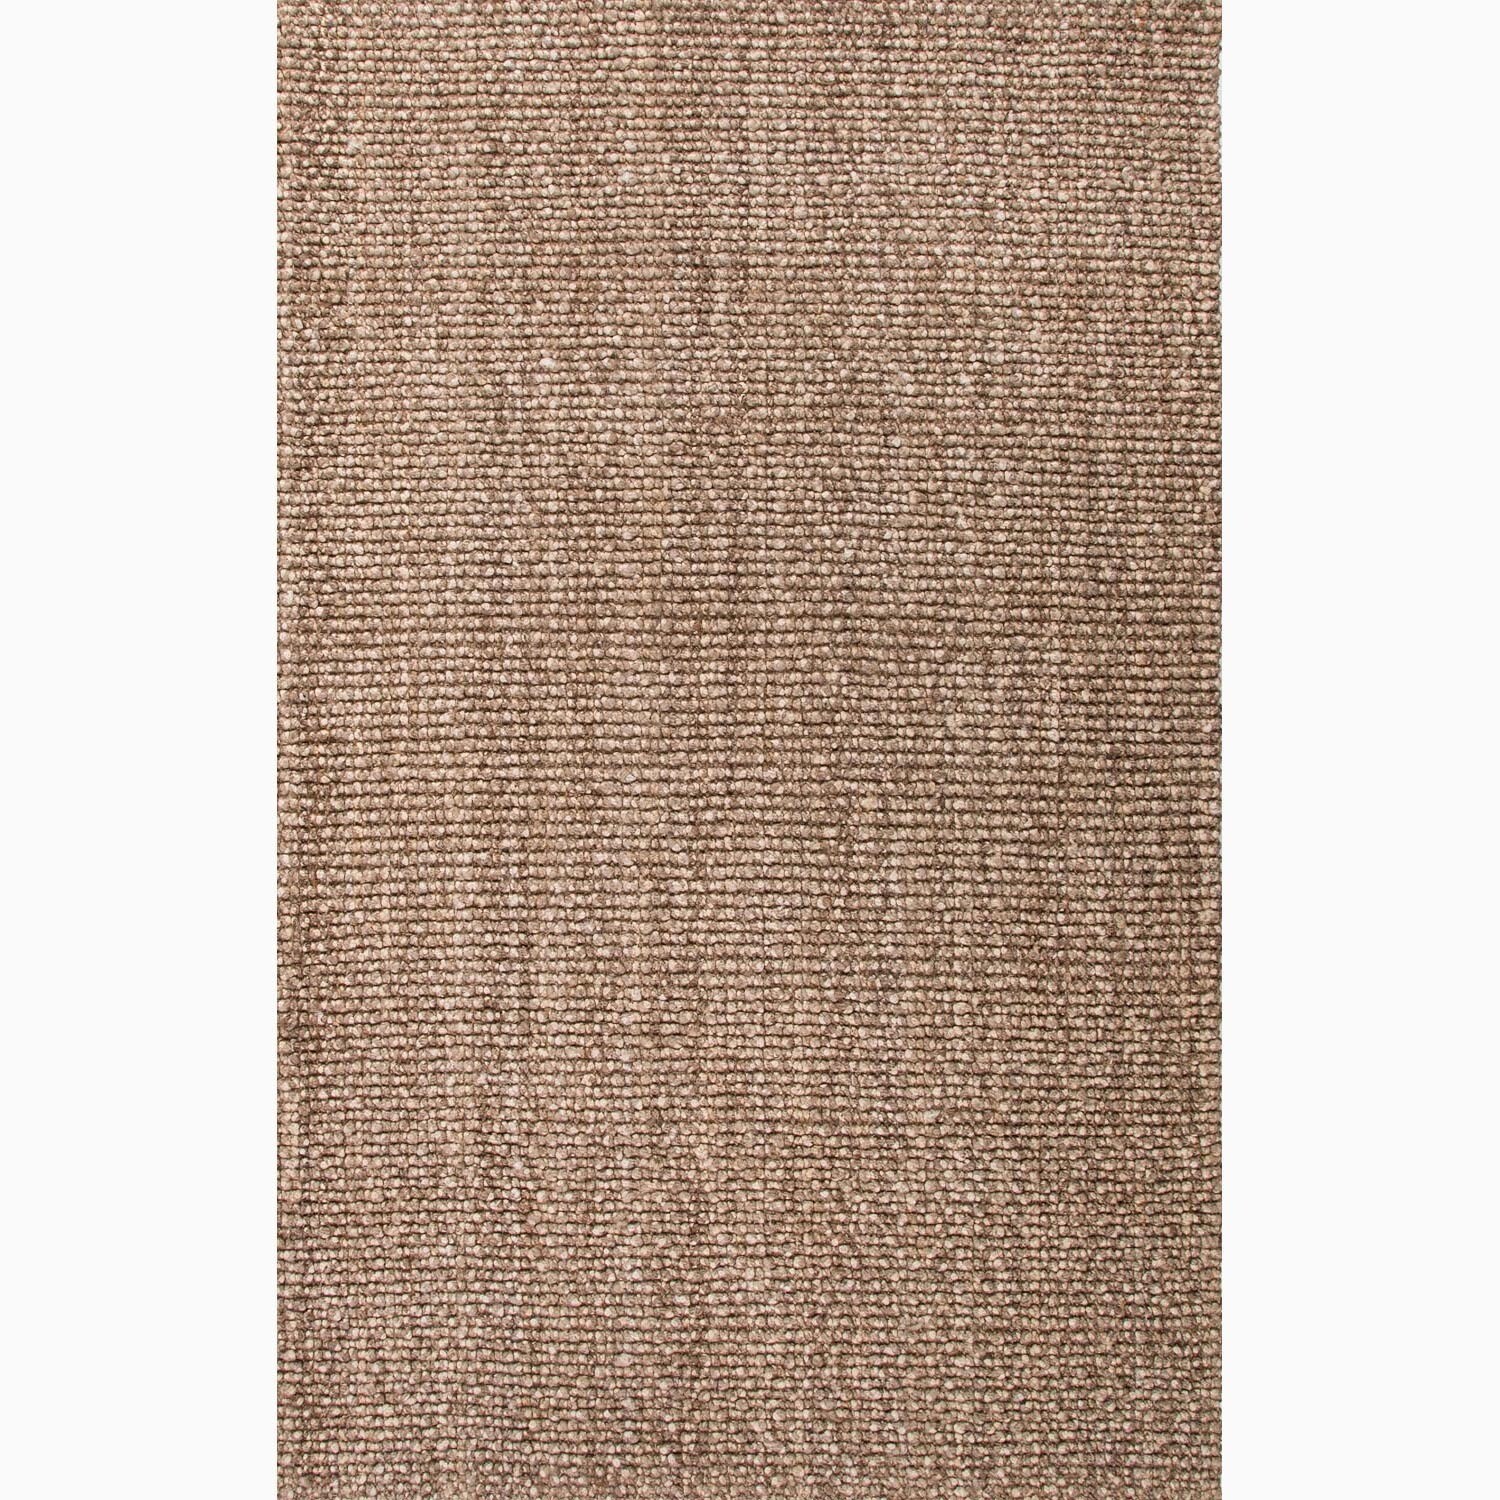 Handmade Contemporary Taupe/ Tan Jute Natural Rug (8 X 10)